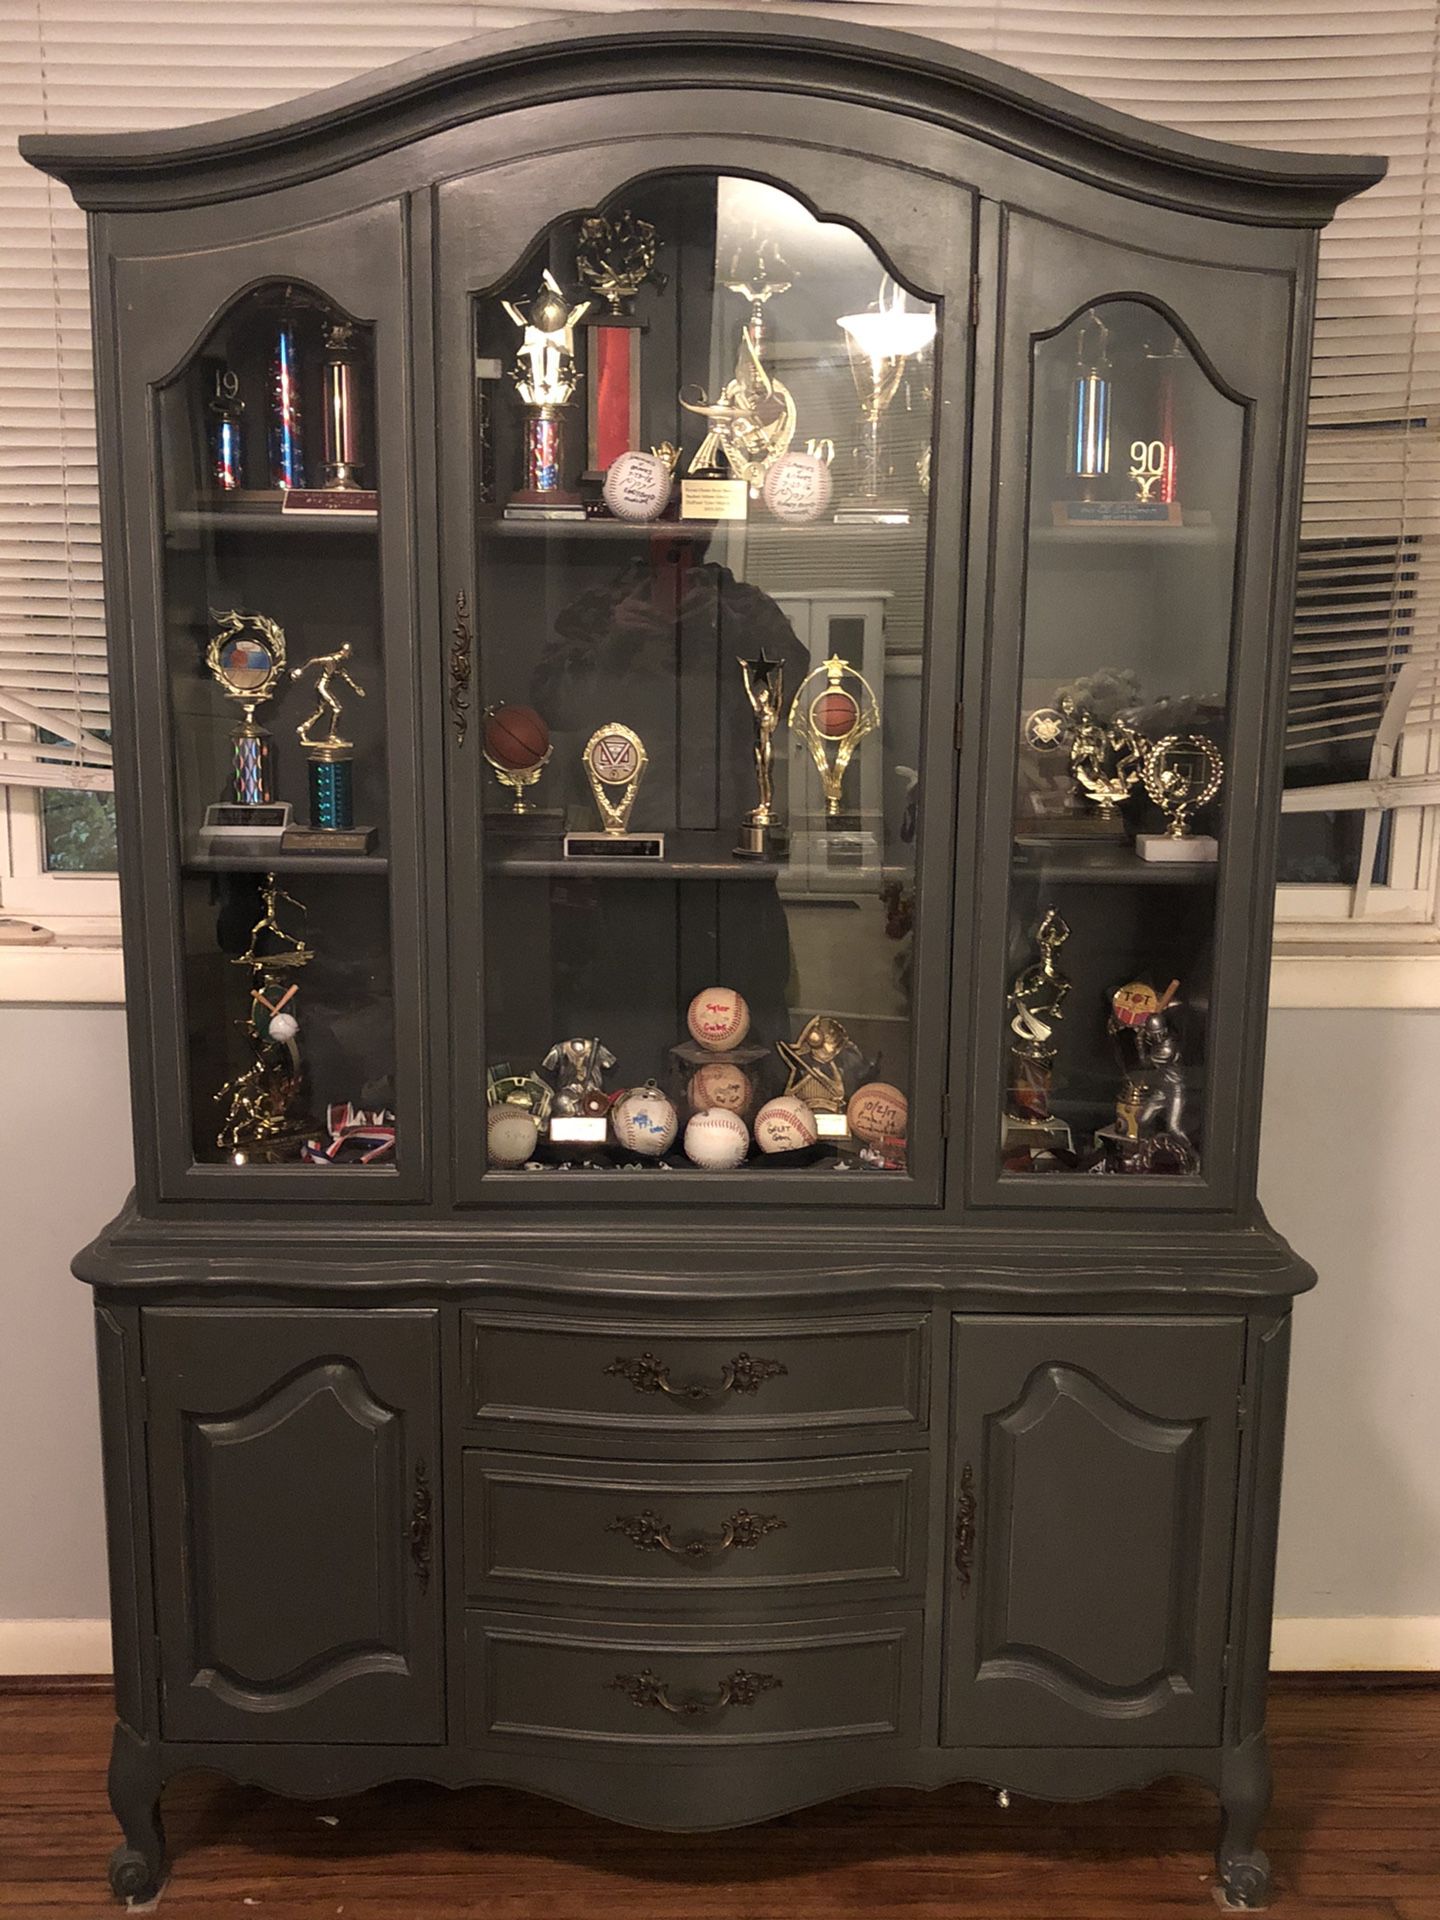 Professionally painted Antique curio cabinet